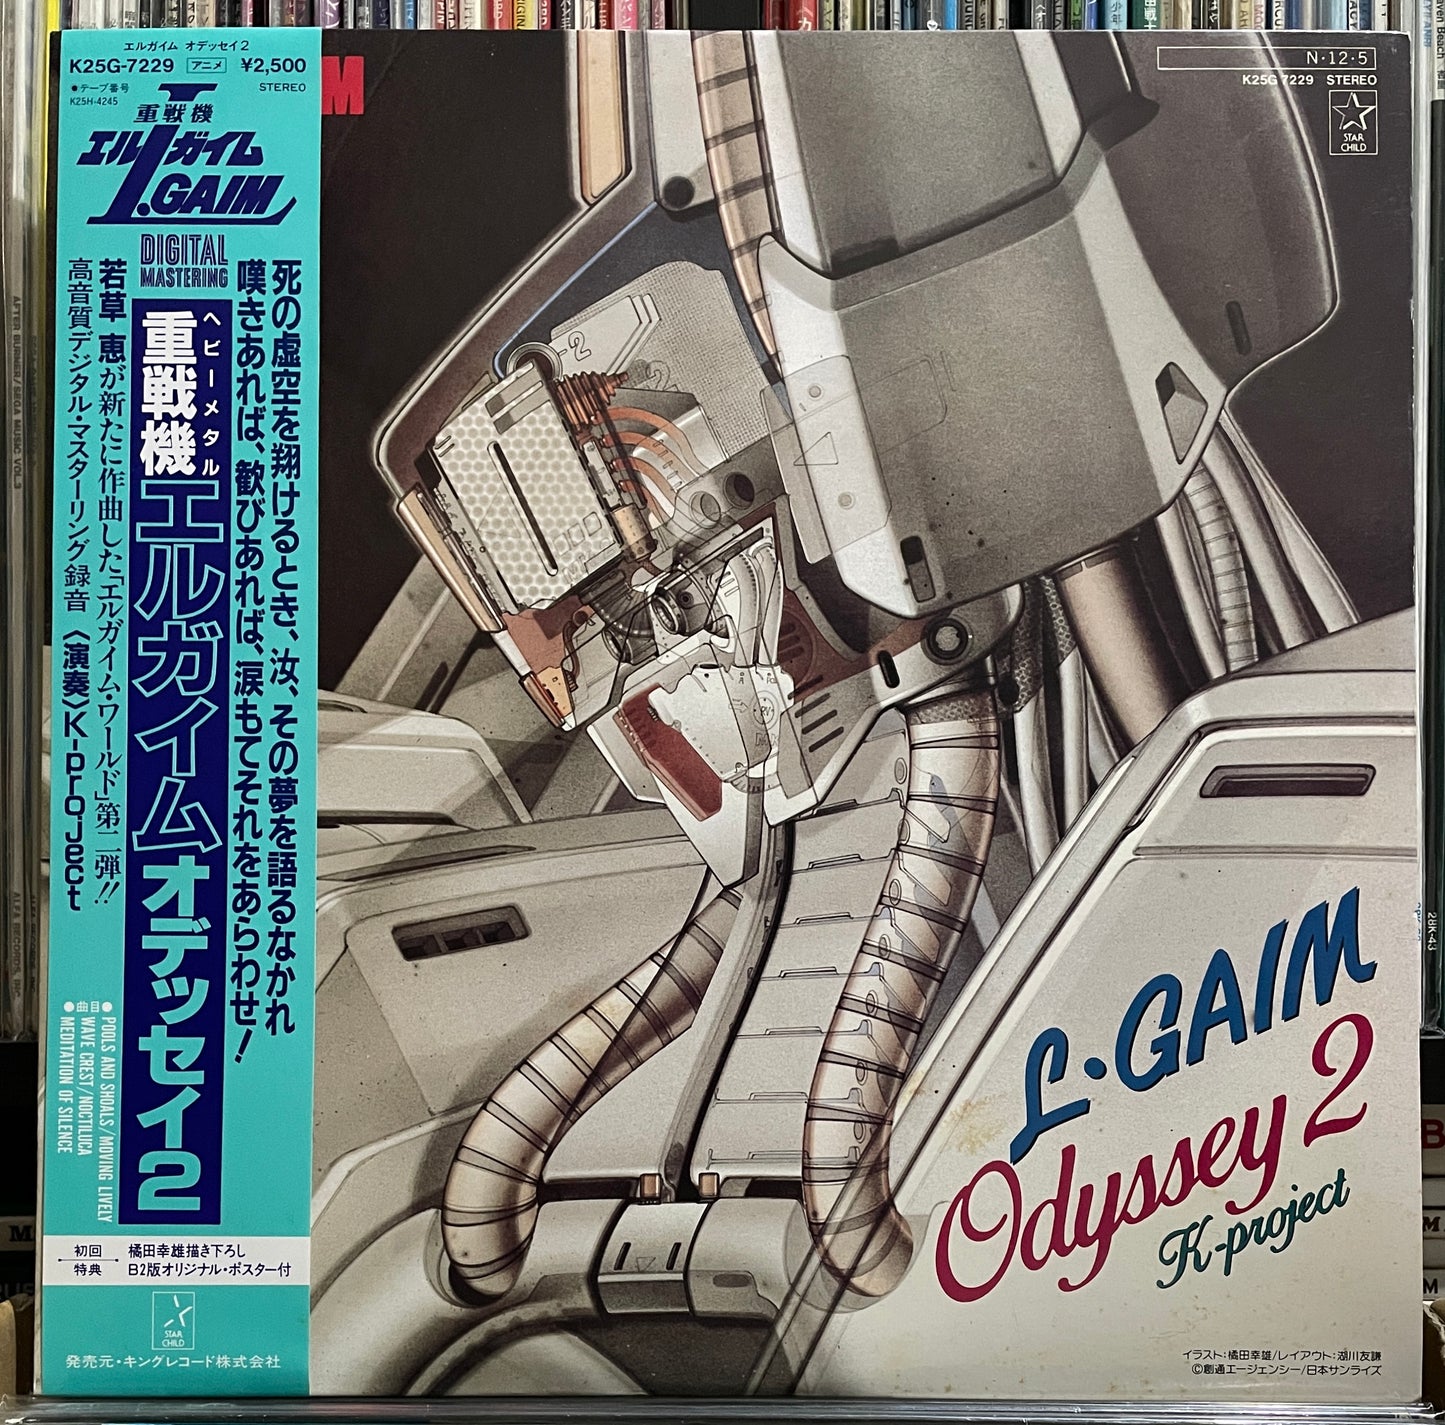 Heavy Metal L Gaim Odyssey 2 “K-Project” (1984)